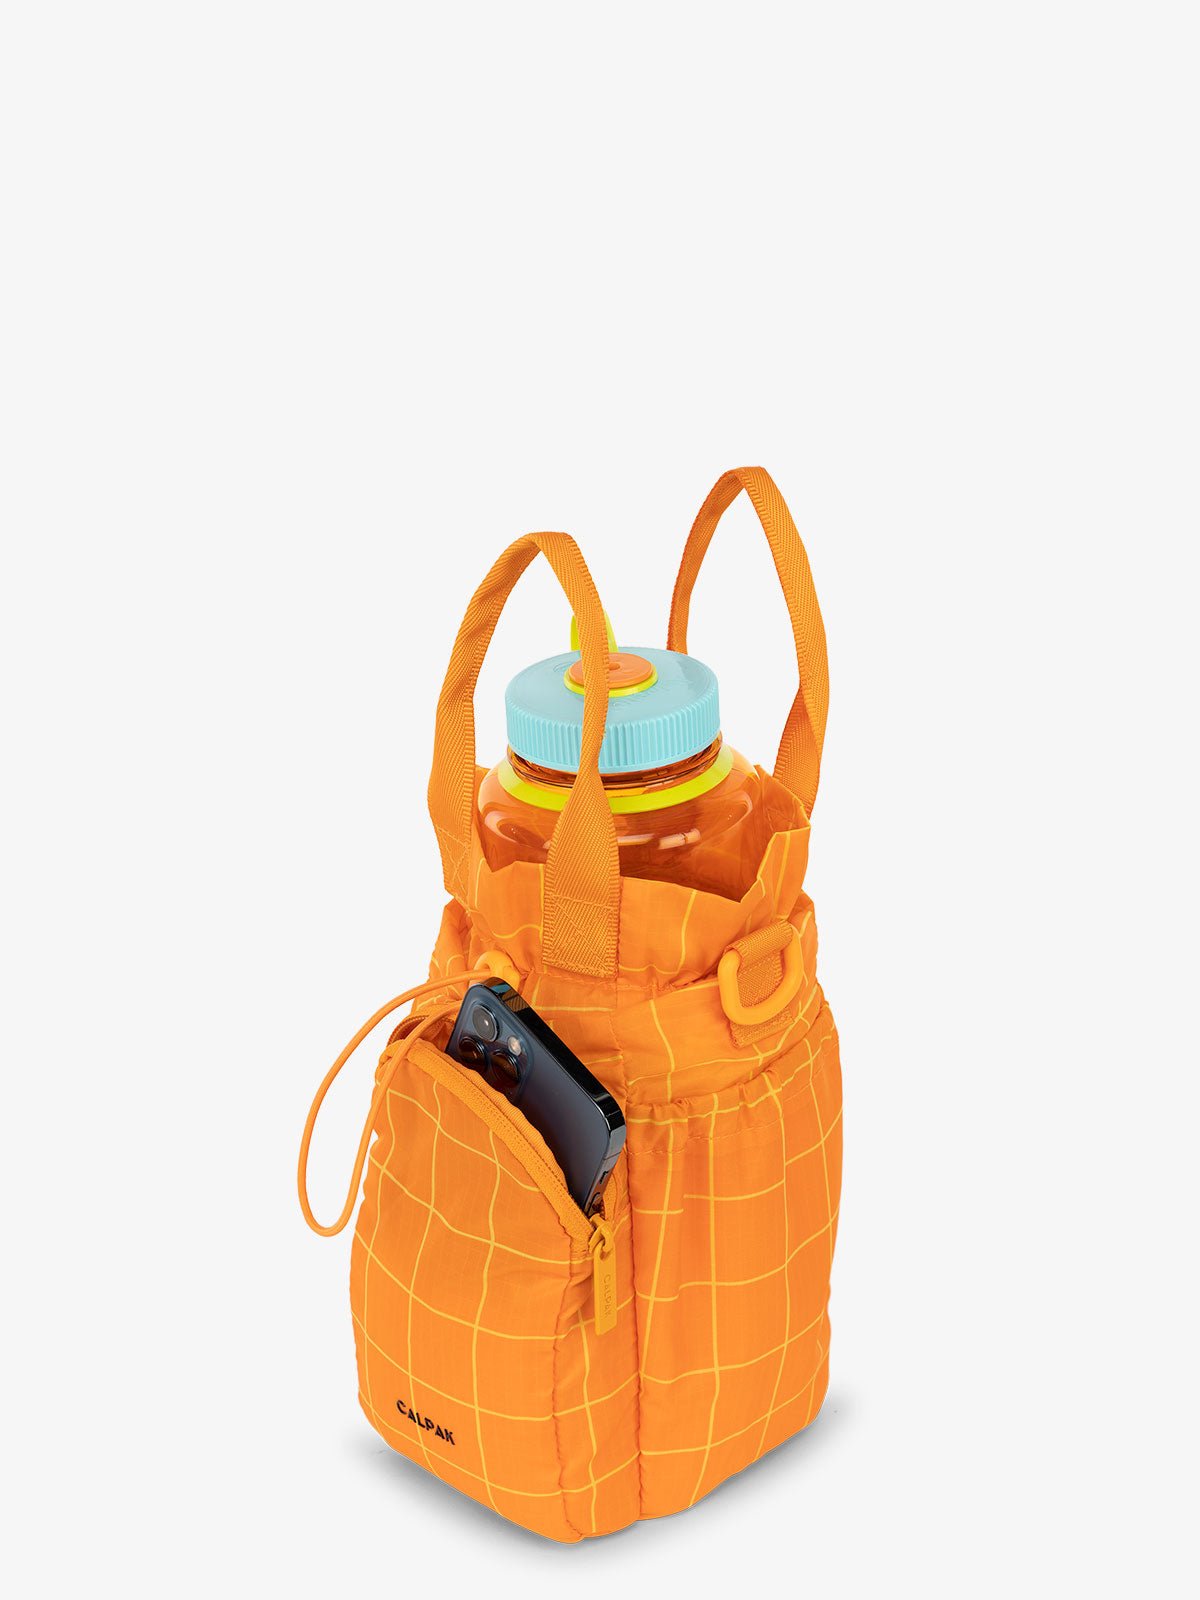 CALPAK Water Bottle carrier with zippered pocket in orange grid print